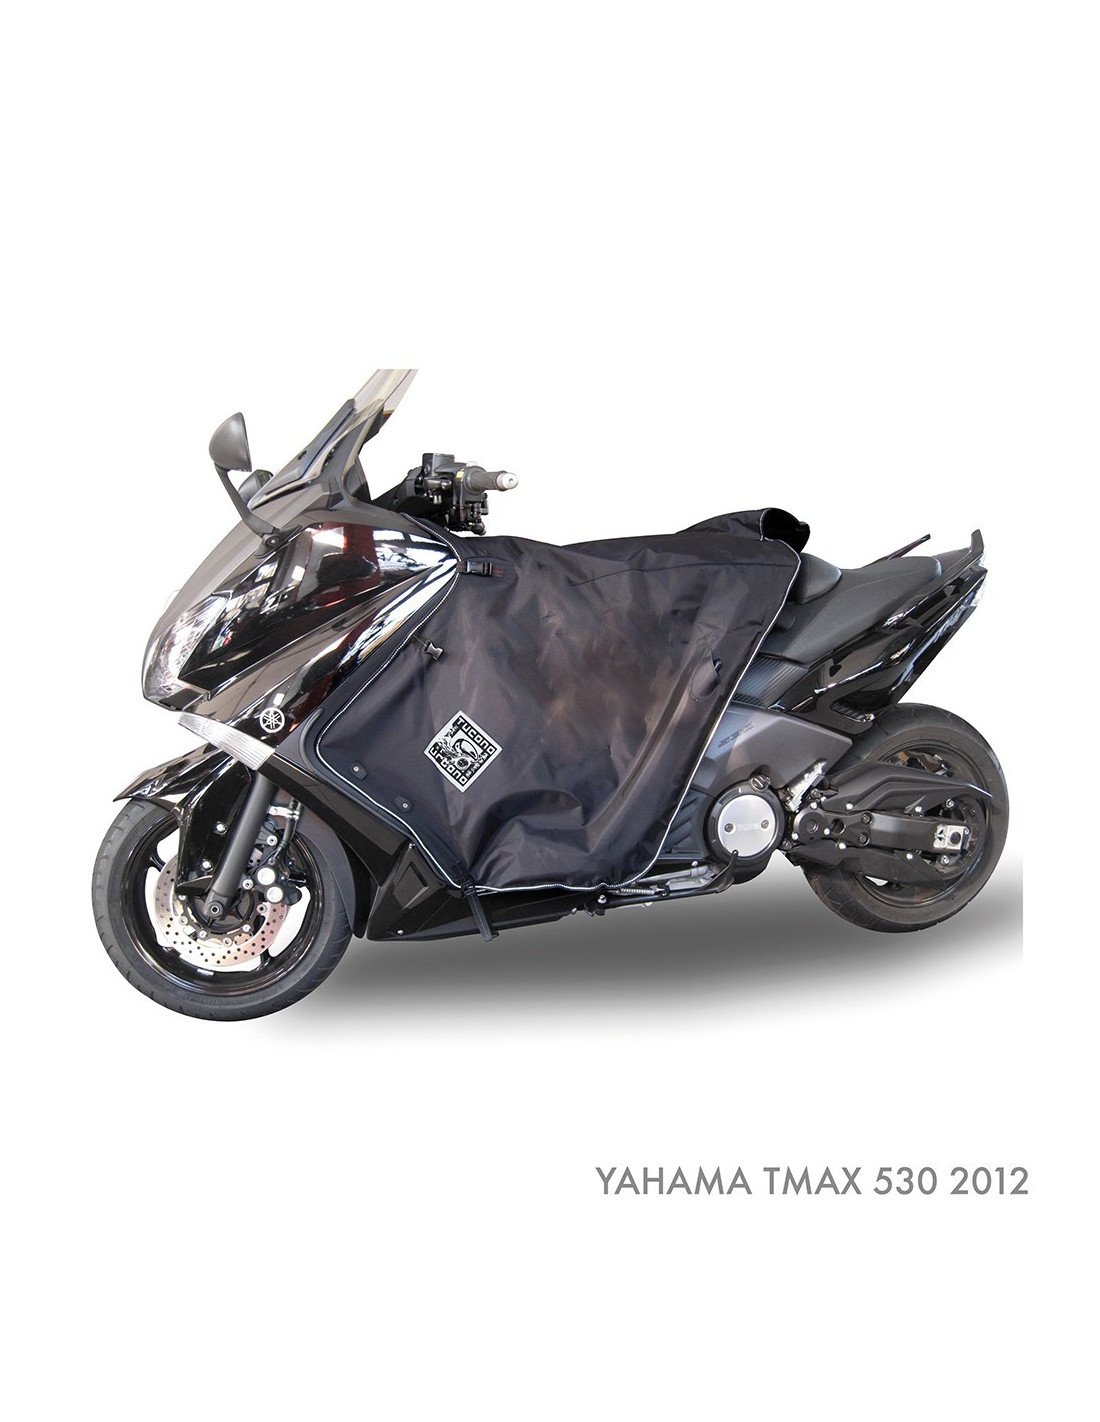 Tablier Yamaha Tmax 530 Tucano Urbano R089